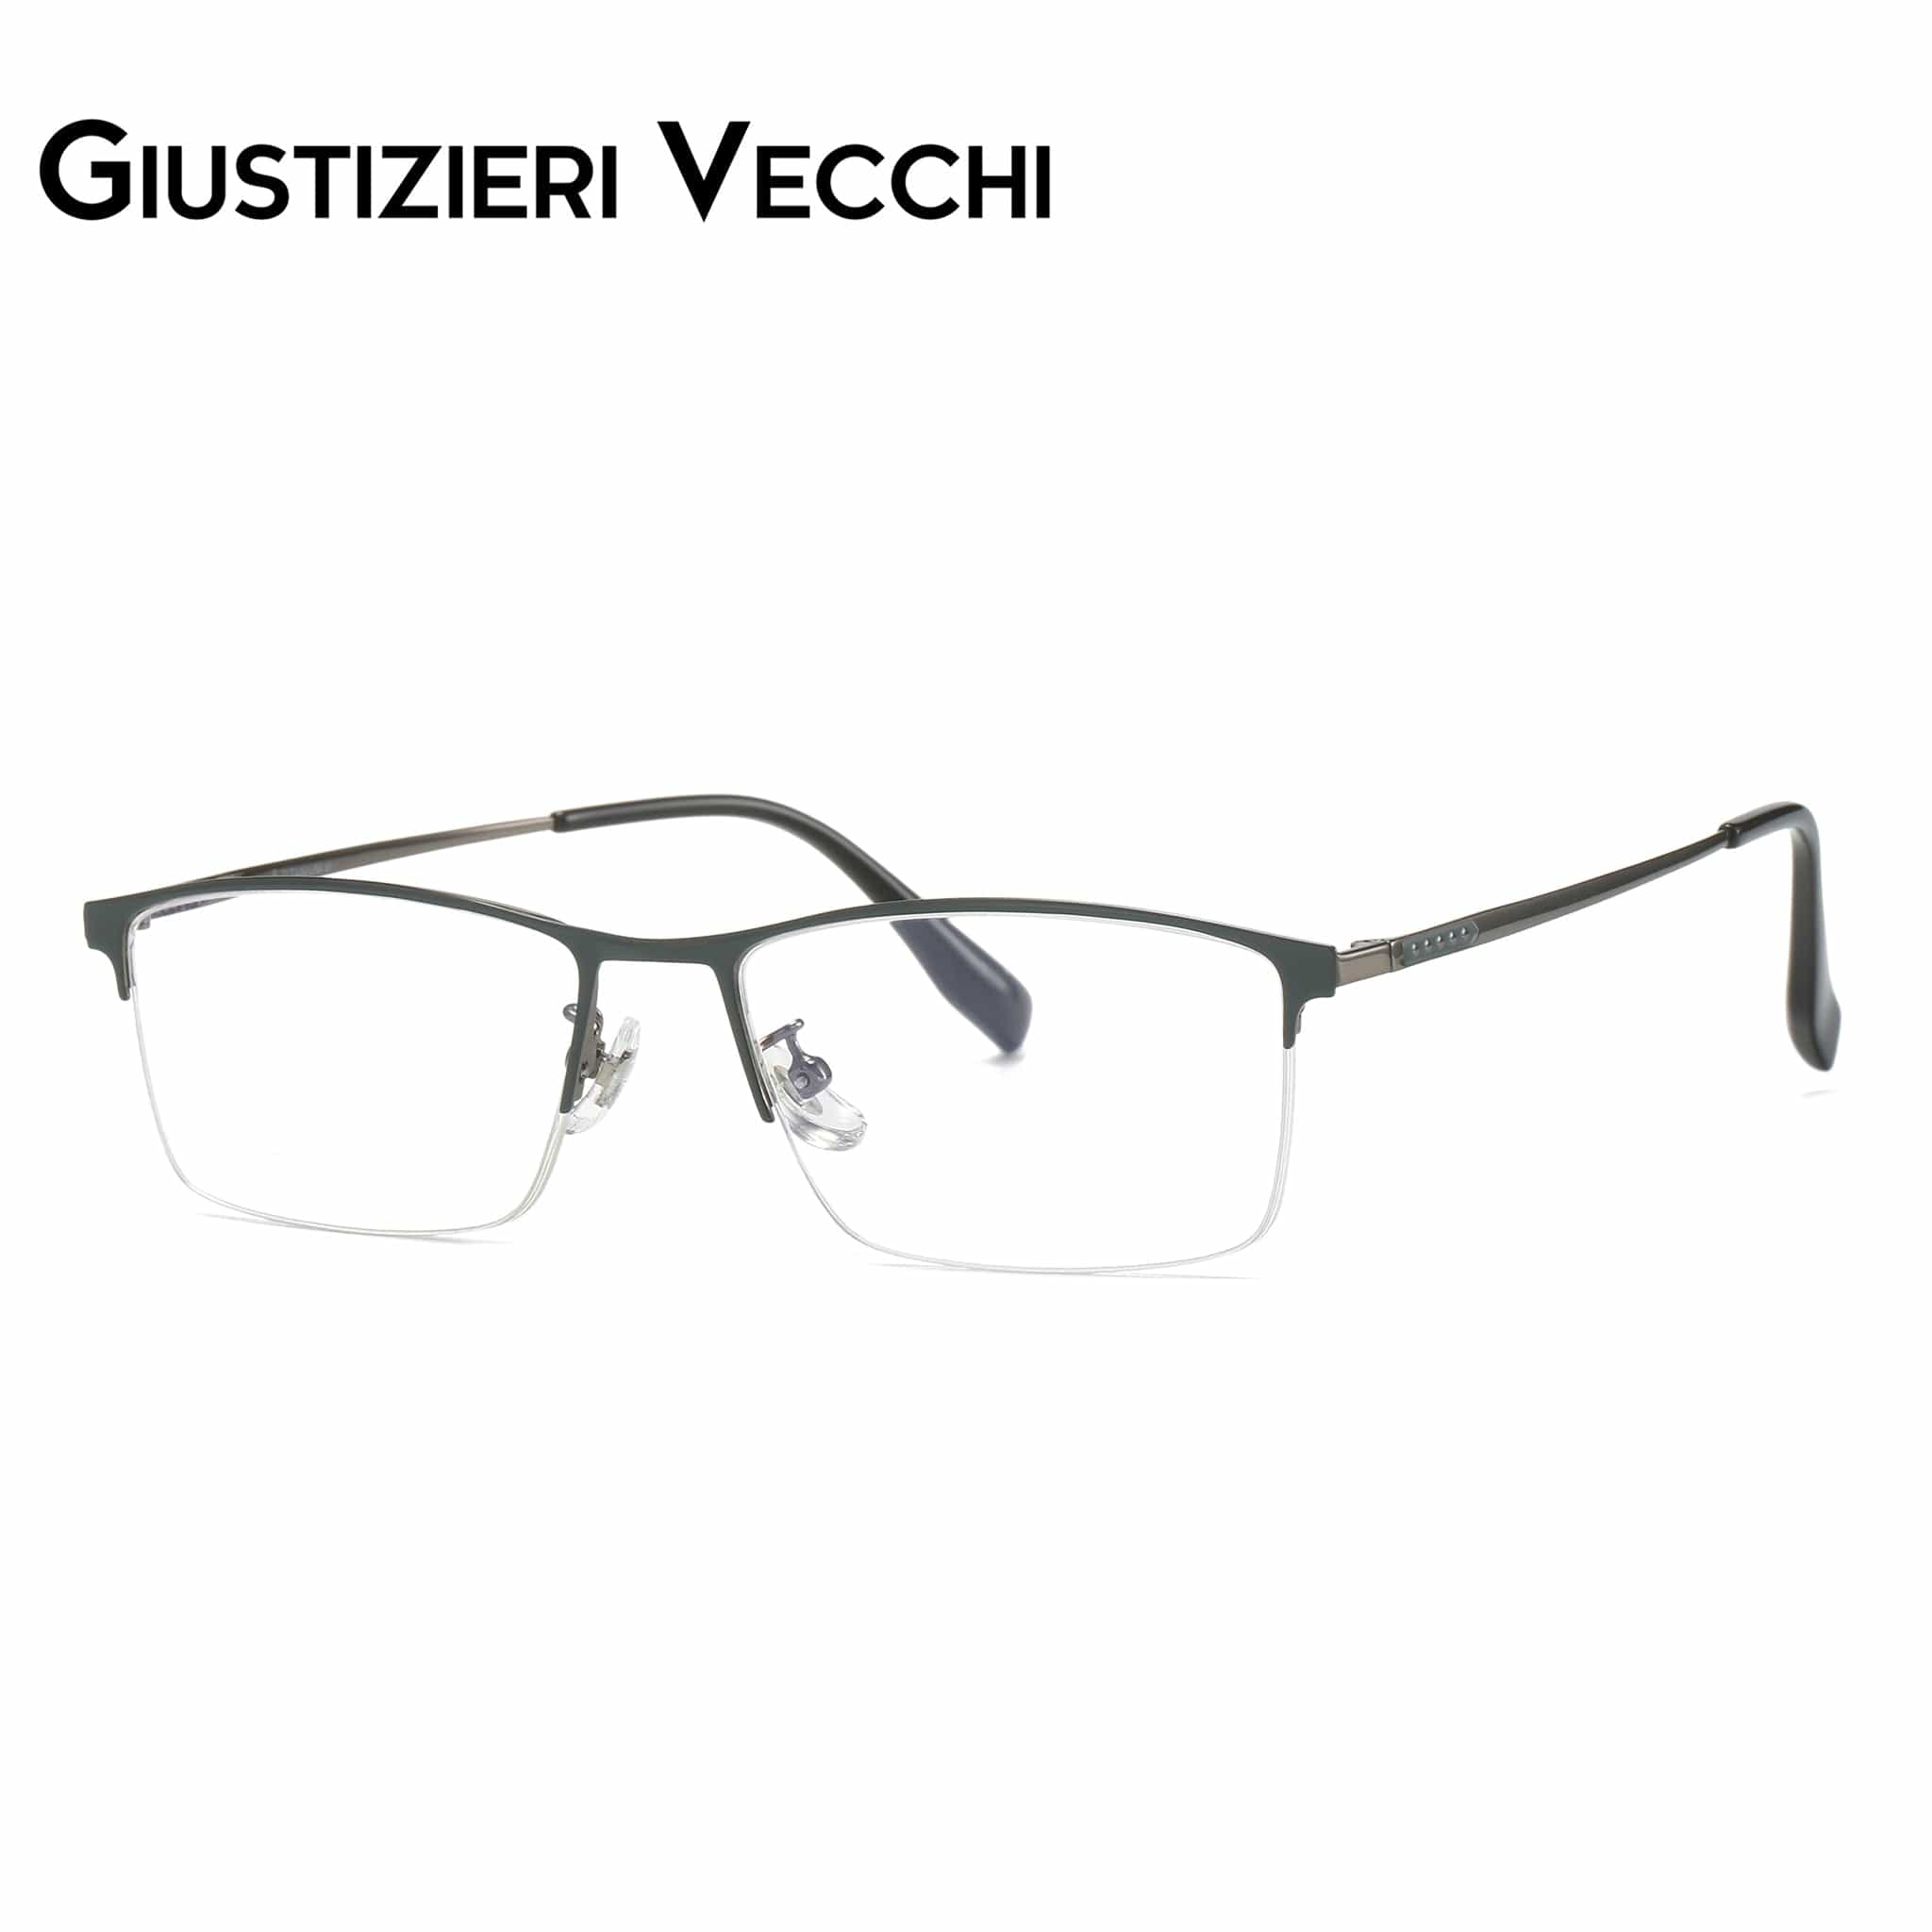 GIUSTIZIERI VECCHI Eyeglasses Thunderbolt Uno